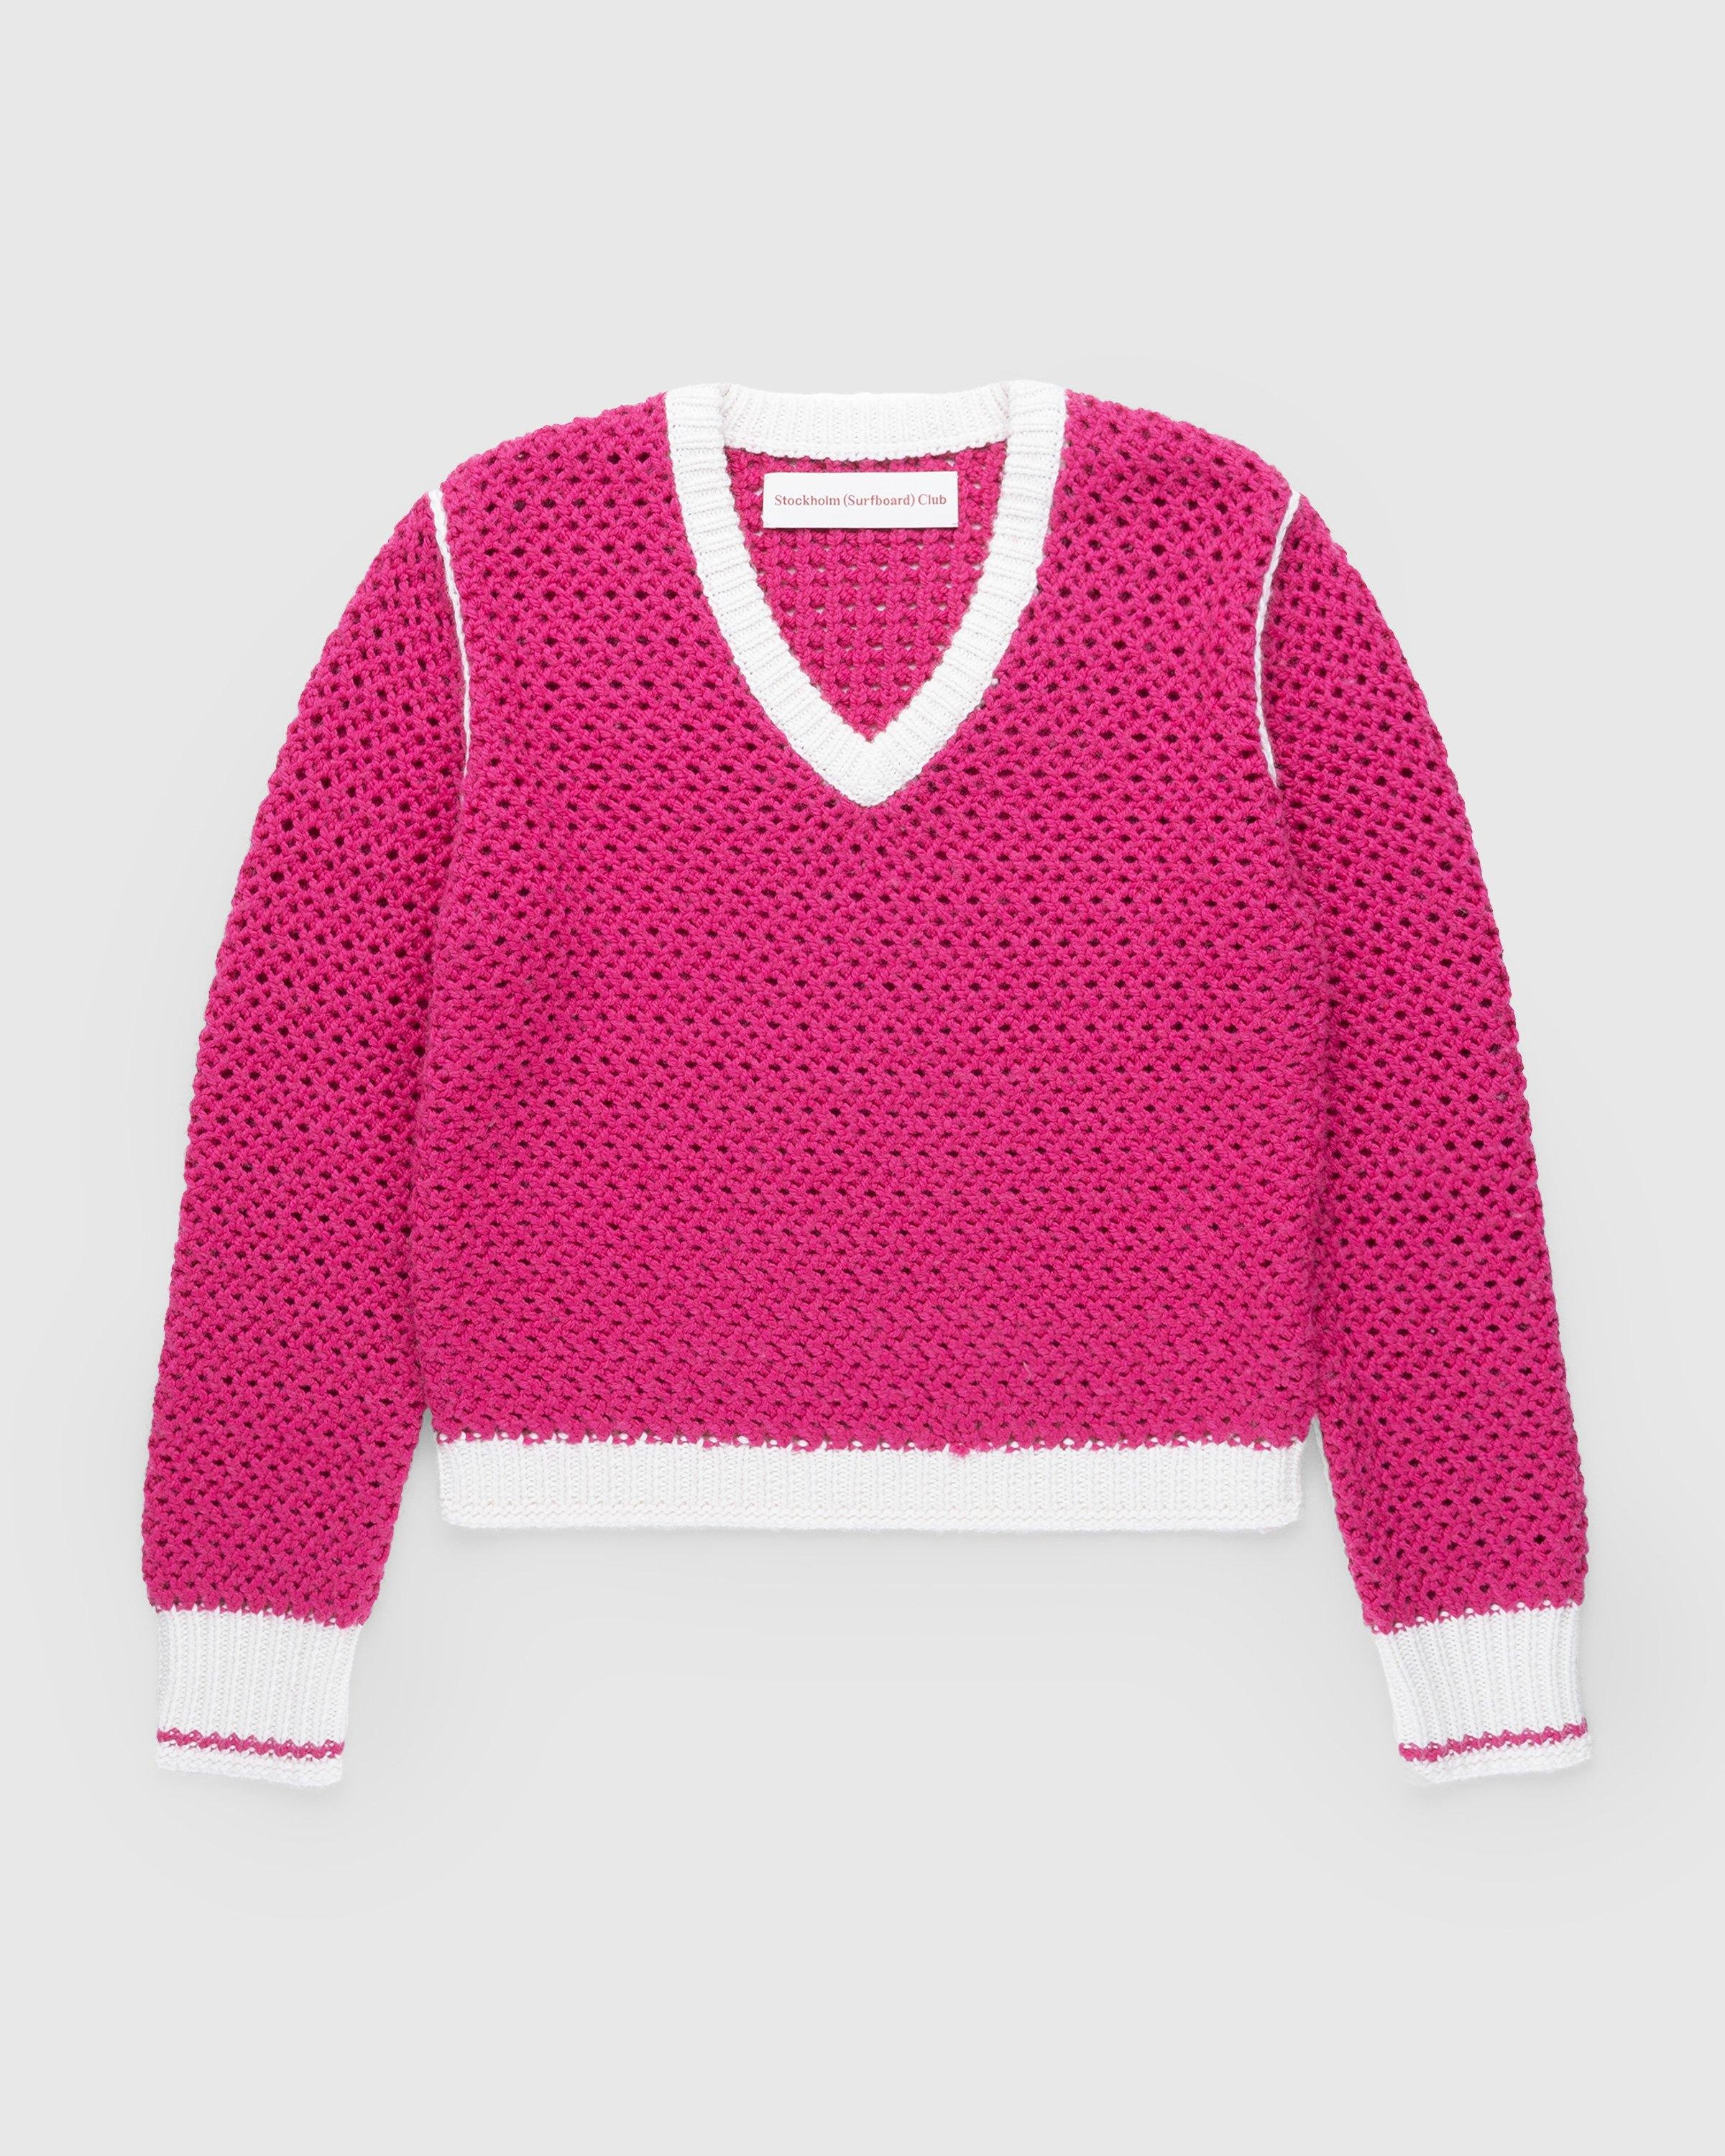 Stockholm Surfboard ClubKnitted V-Neck Sweater Flou Pink by HIGHSNOBIETY